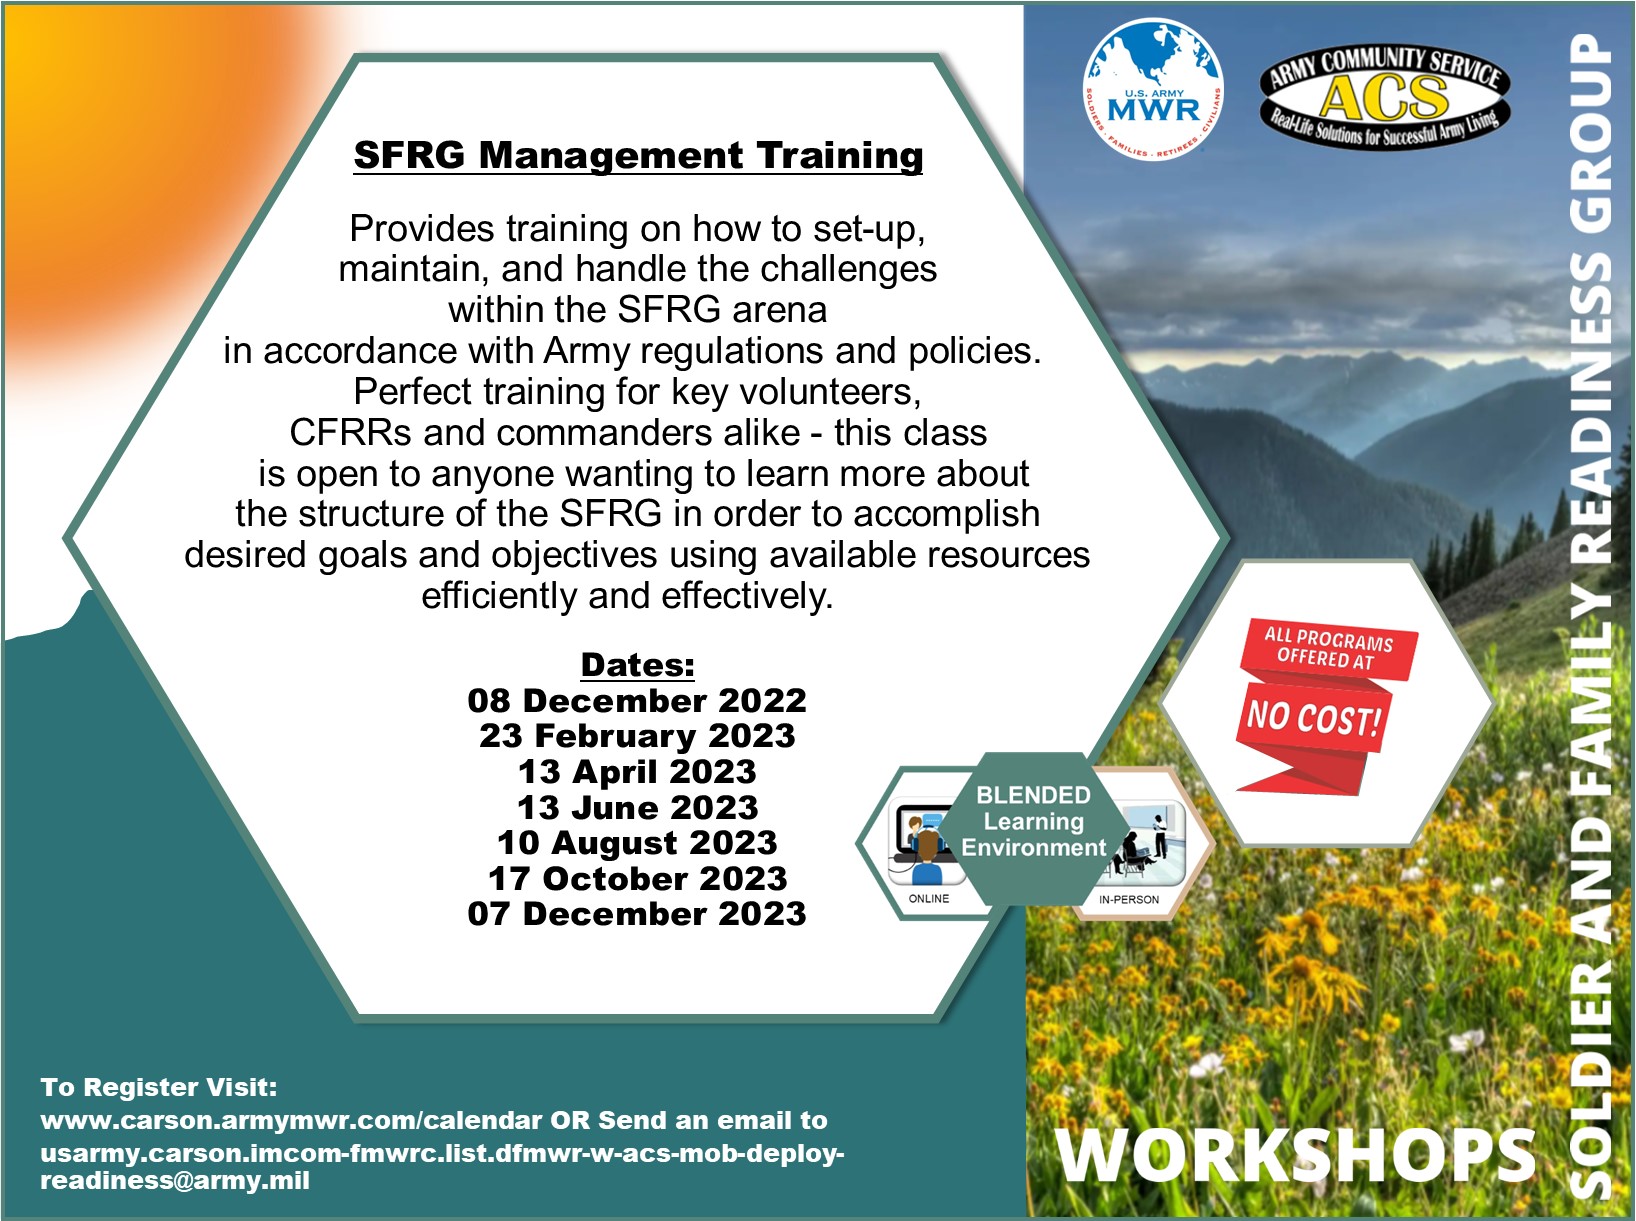 SFRG Management Training